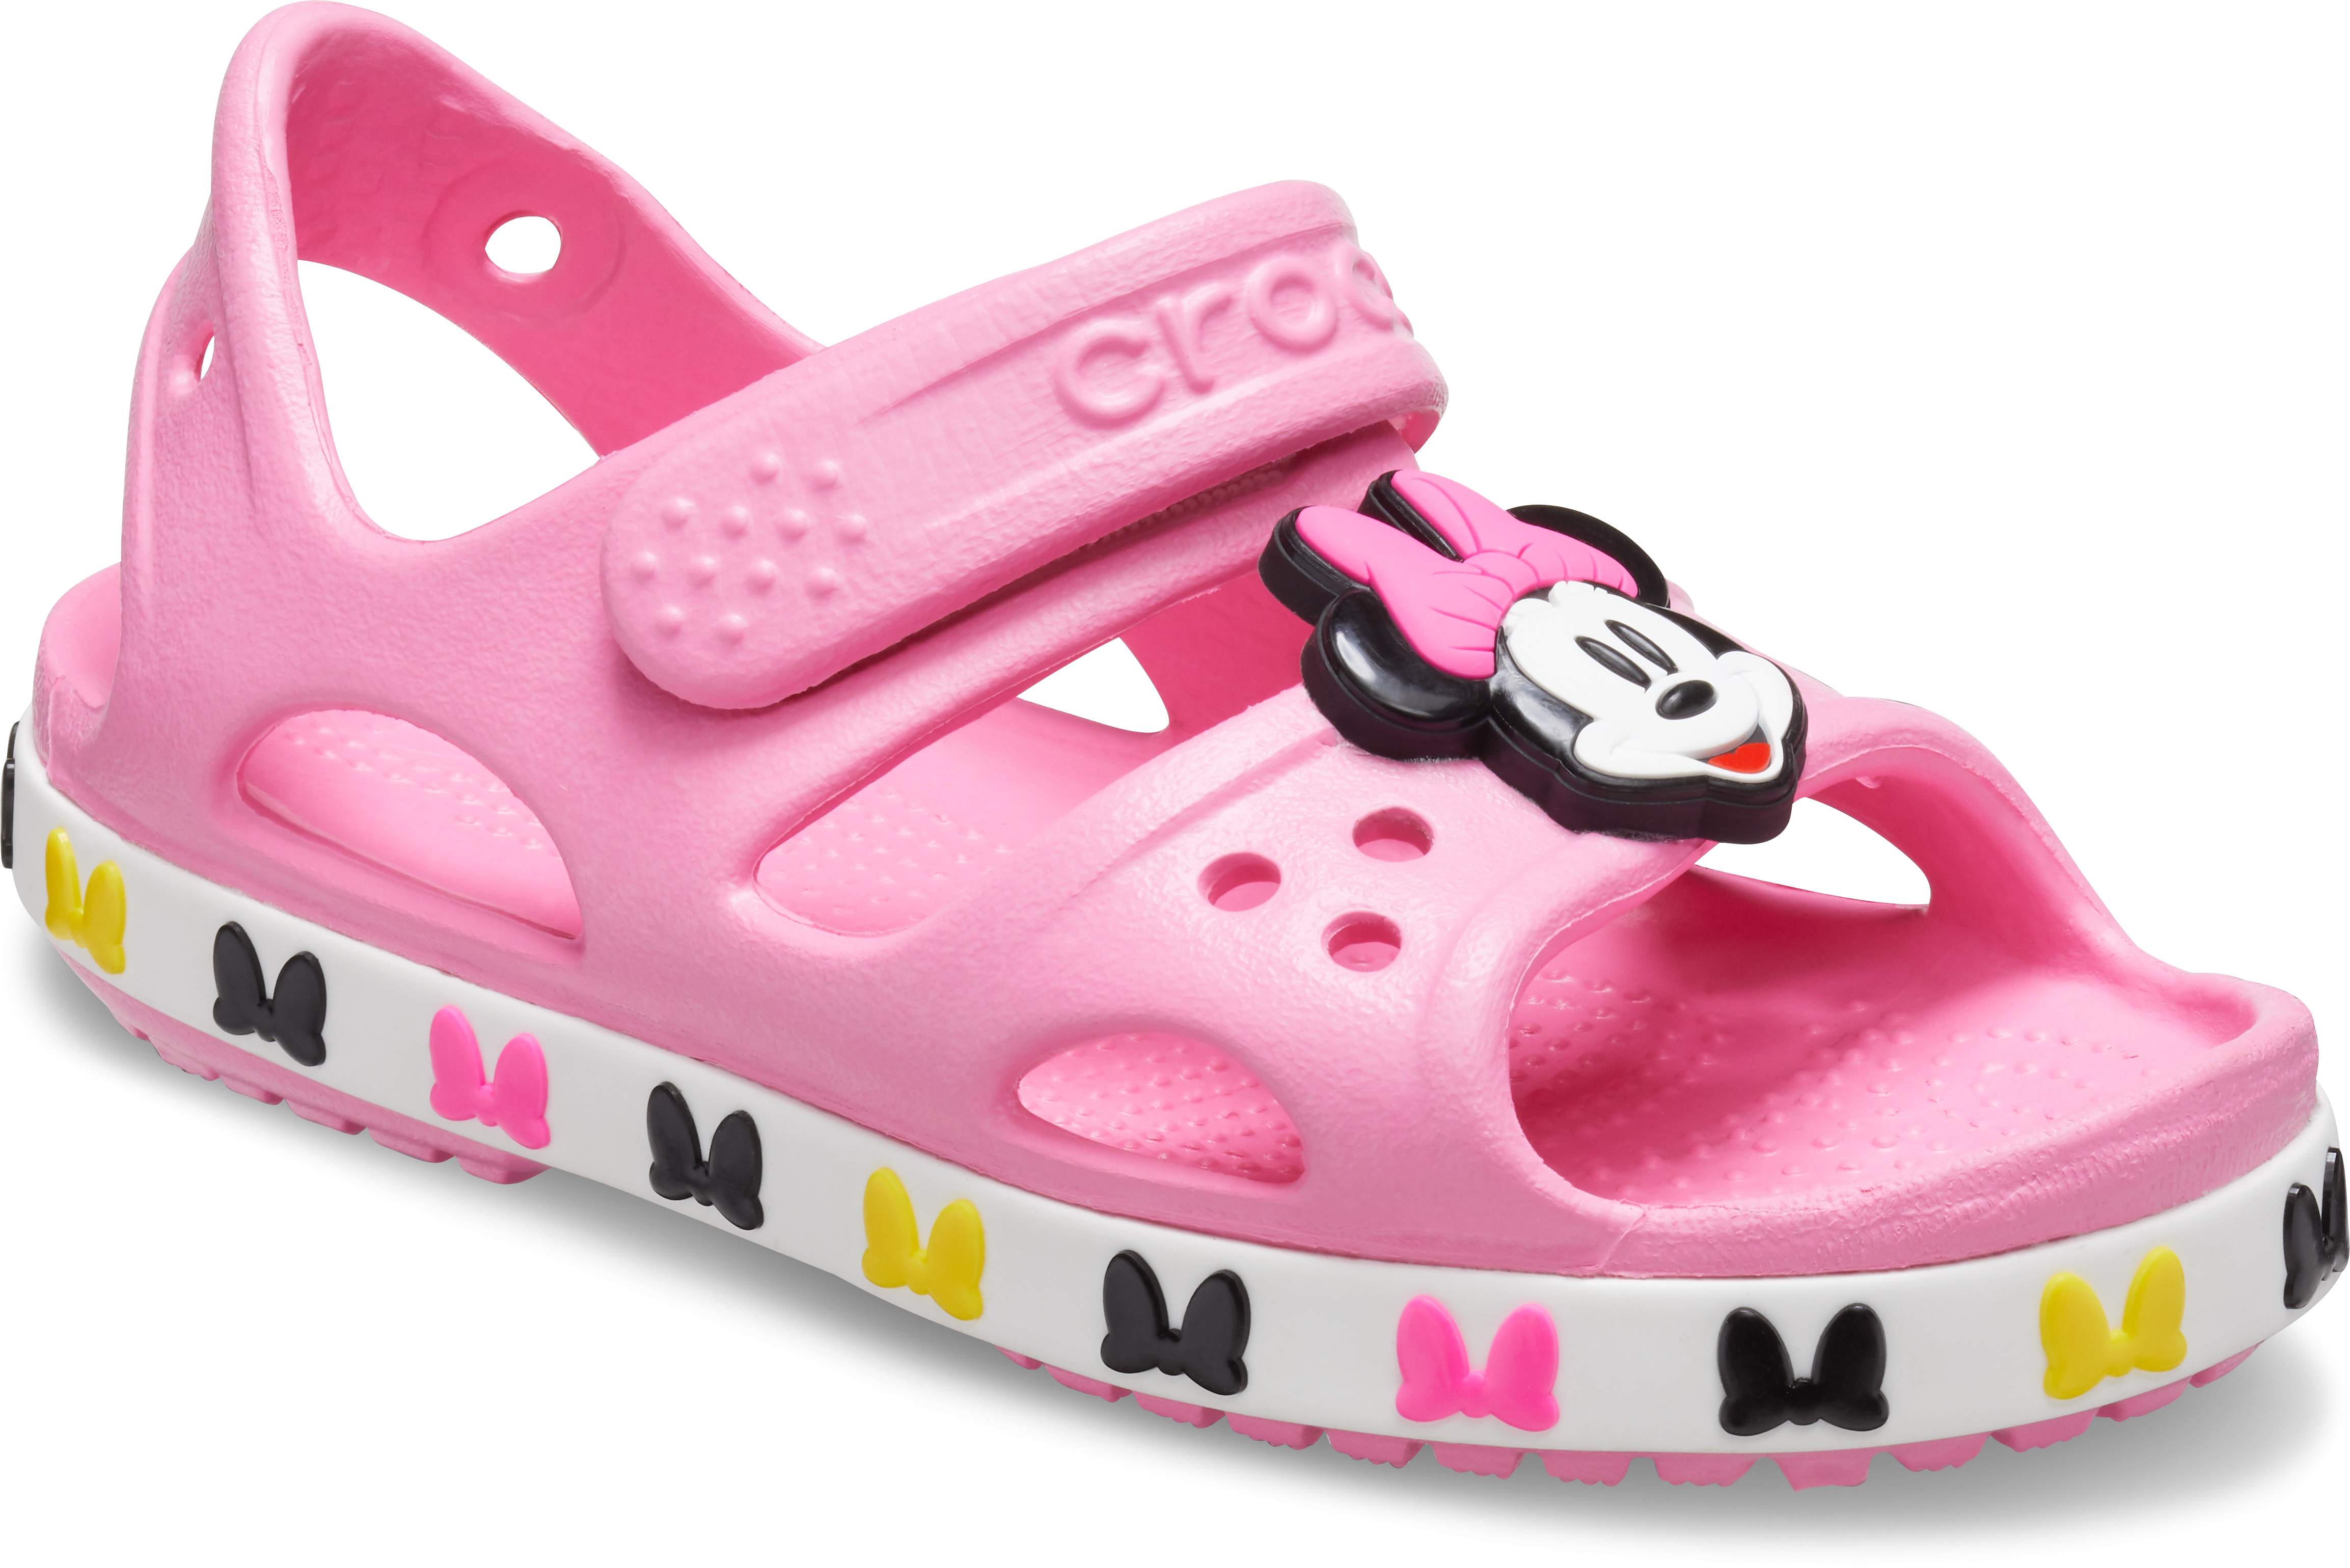 croc sandals for kids